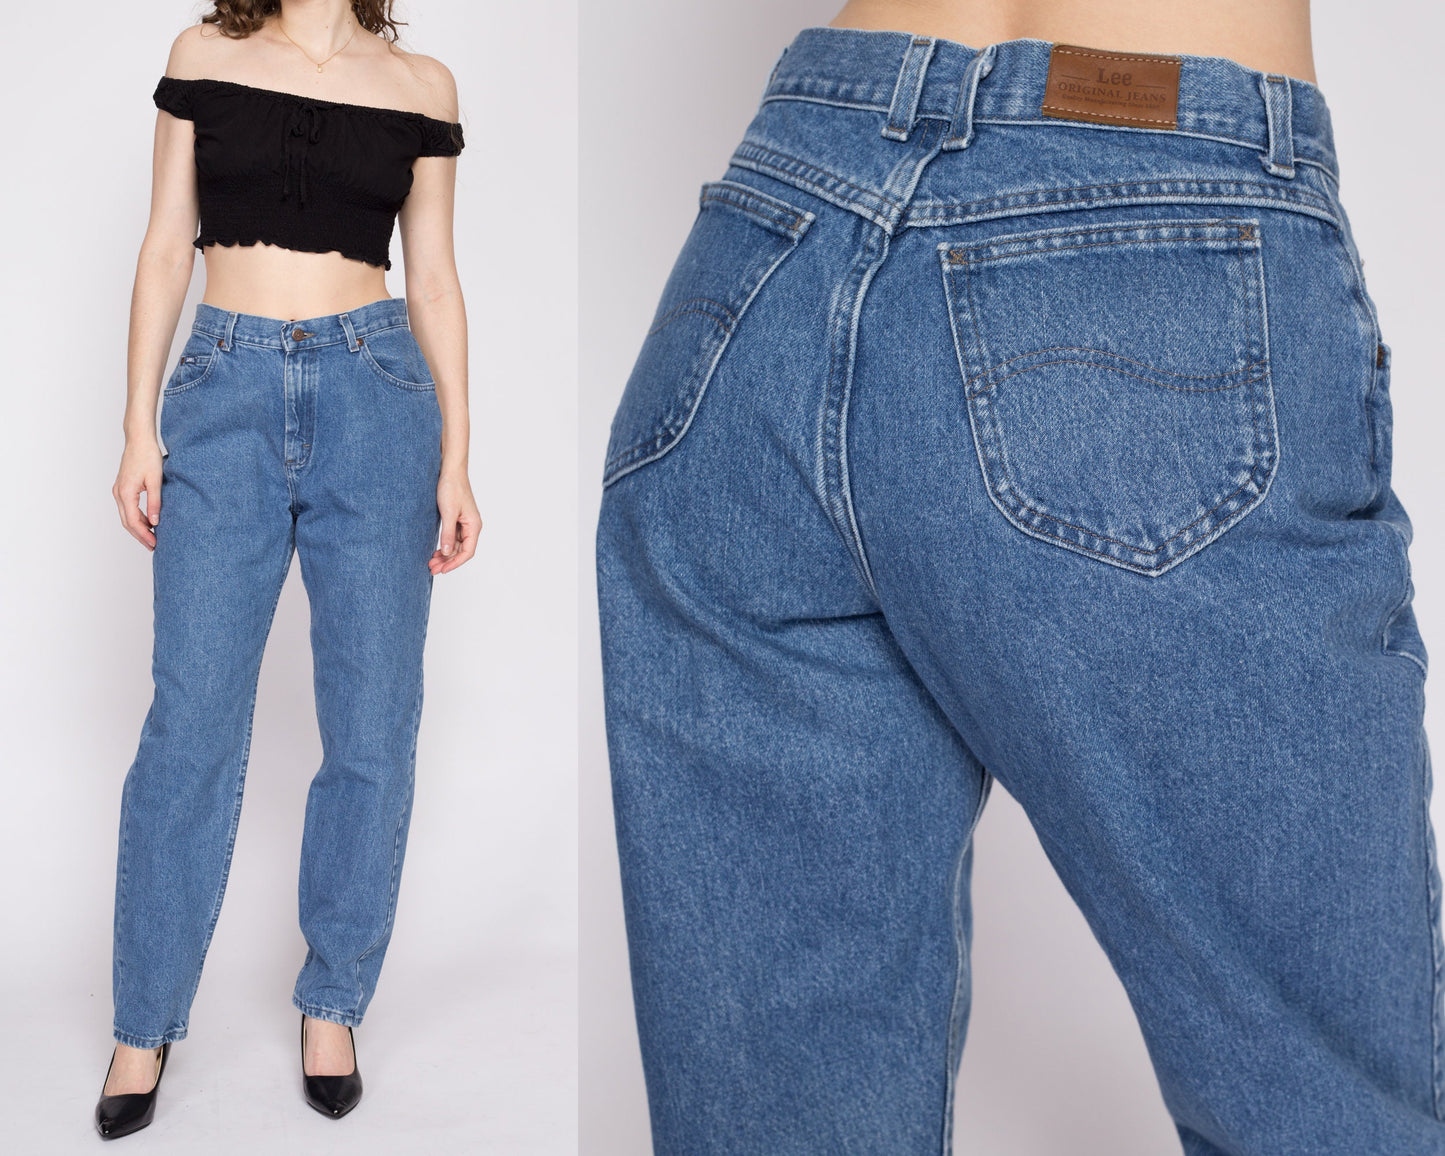 90s Lee High Waisted Mom Jeans - Medium to Large, 30.5" | Vintage Denim Tapered Leg Jeans